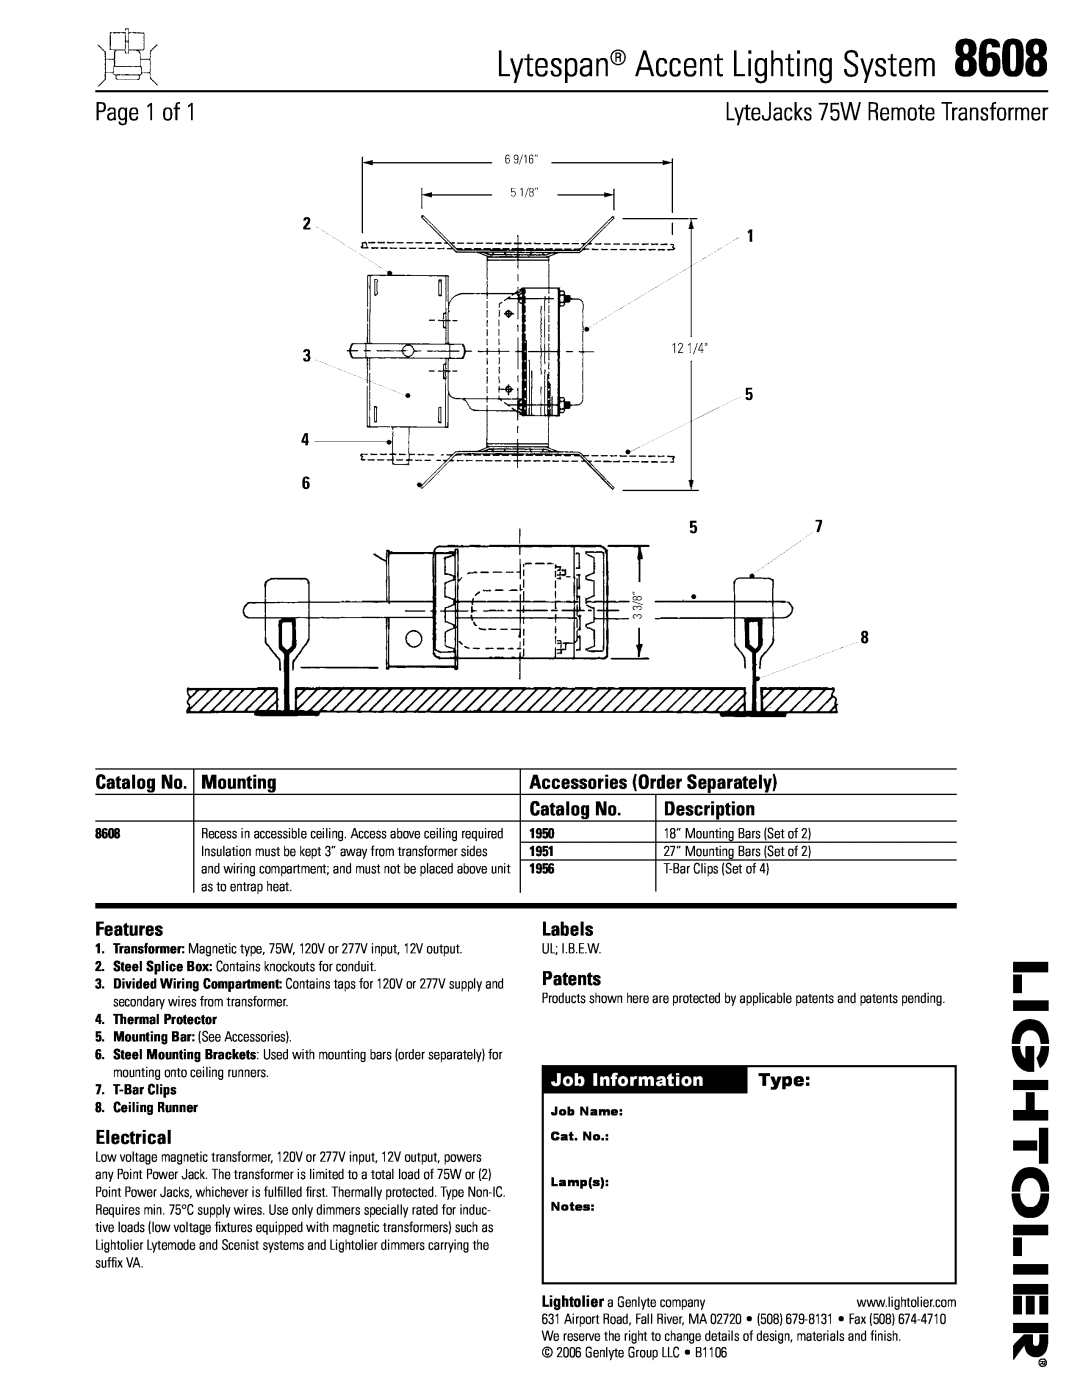 Lightolier 8608 manual Lytespan Accent Lighting System, Page of, LyteJacks 75W Remote Transformer, Mounting, Catalog No 